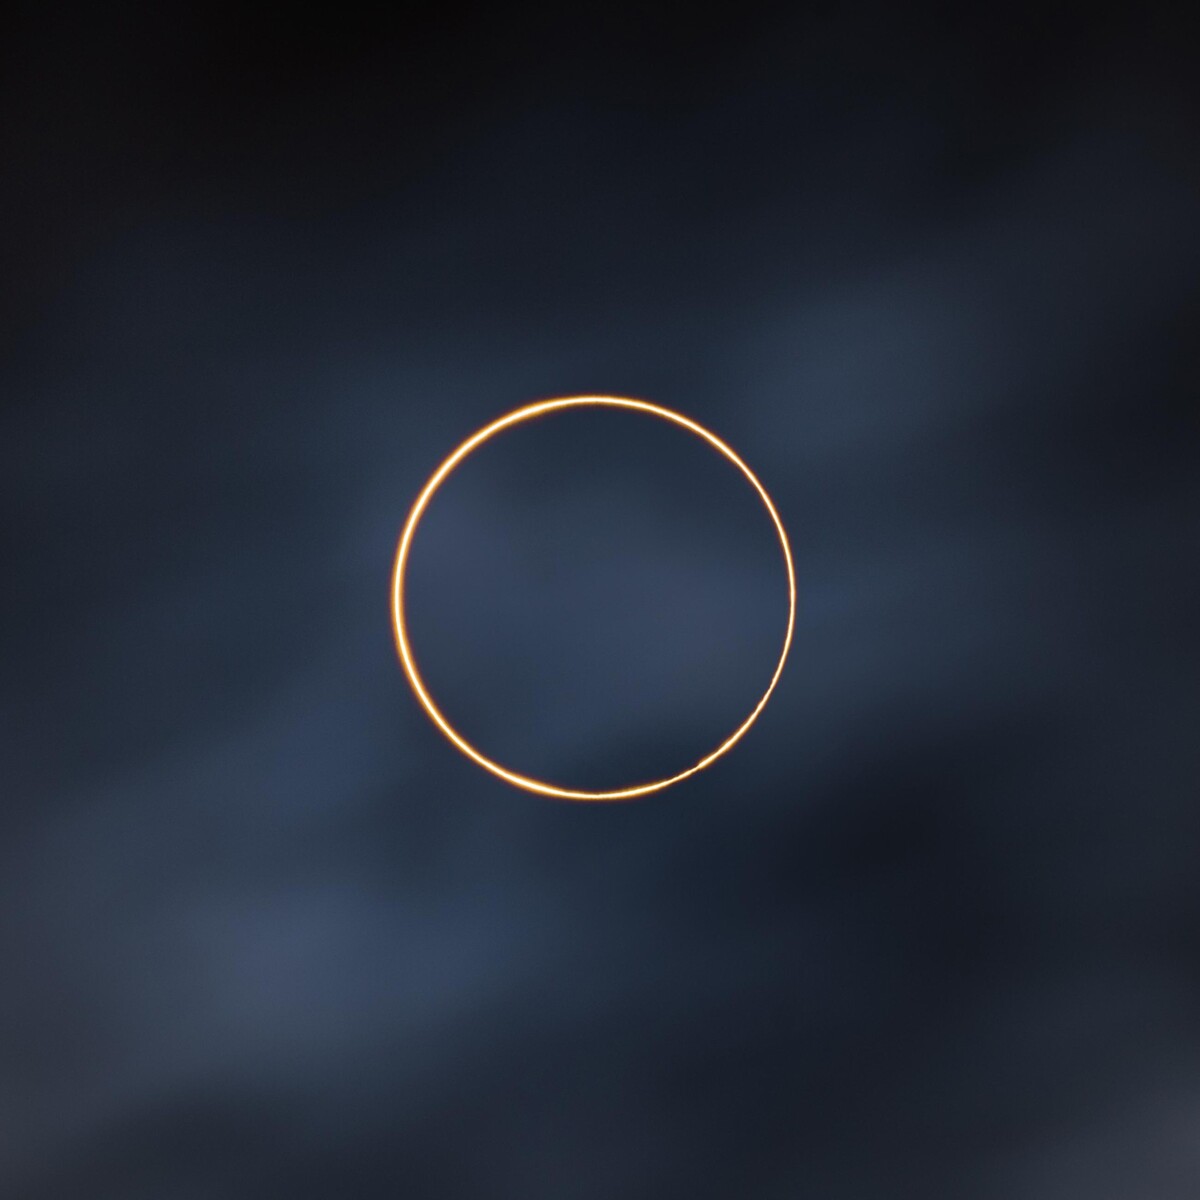 the golden ring slunce Shuchang Dong